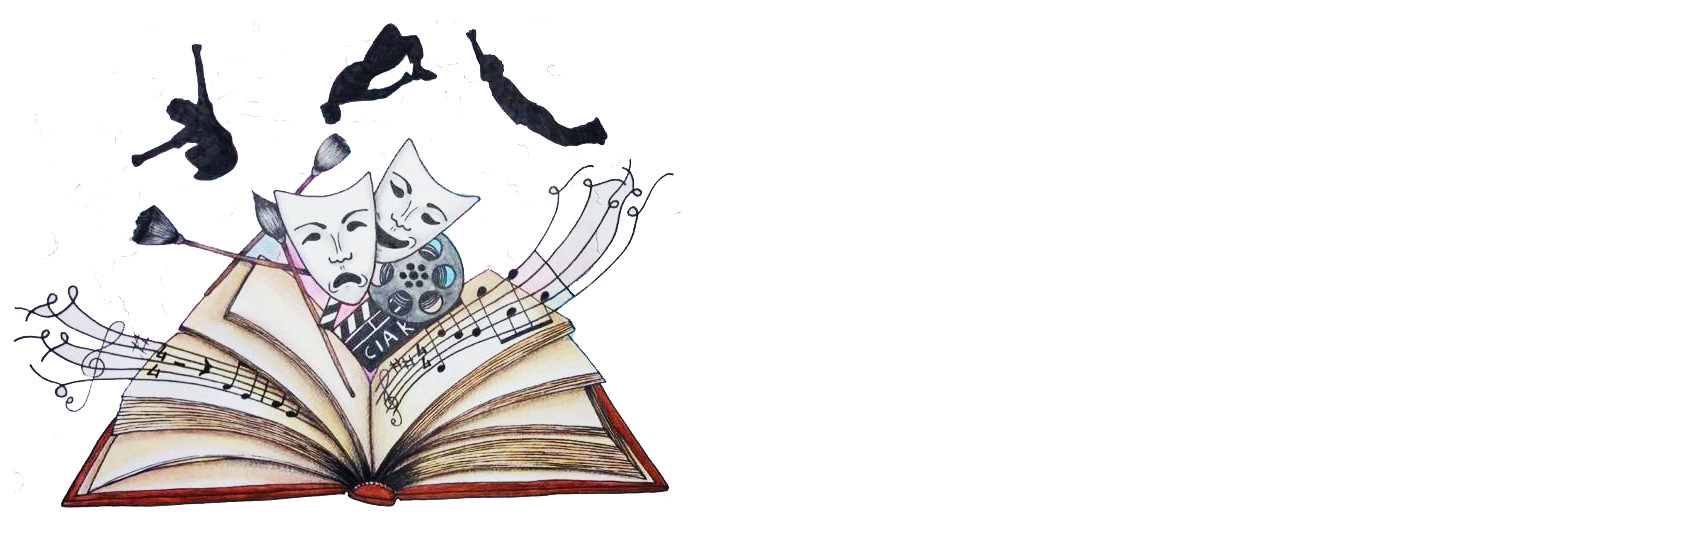 ex-mercato-torrespaccata-logo